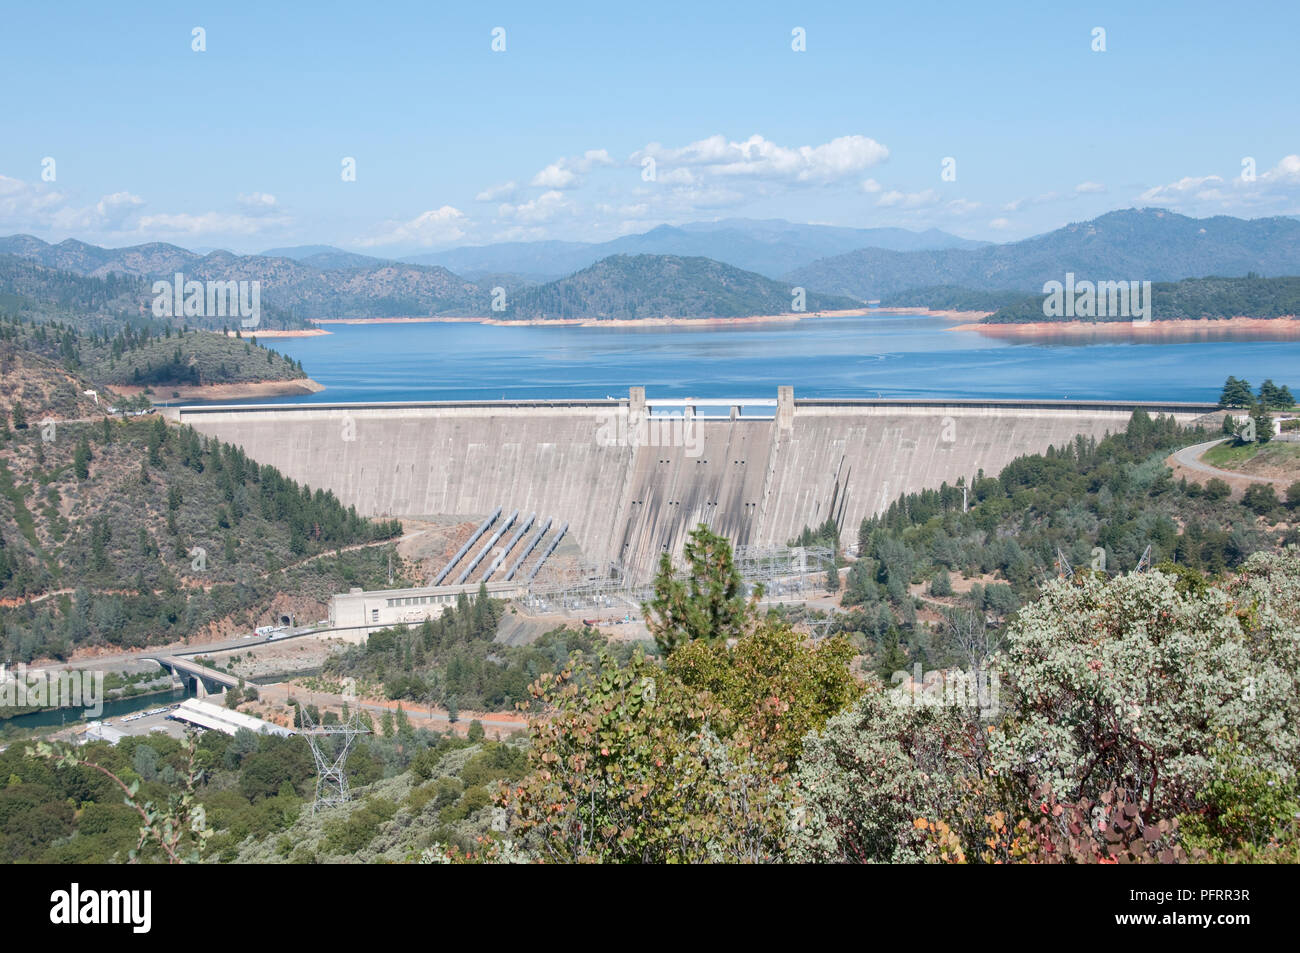 USA, California, Shasta County, view of the Shasta Dam, dam across the Sacramento River Stock Photo